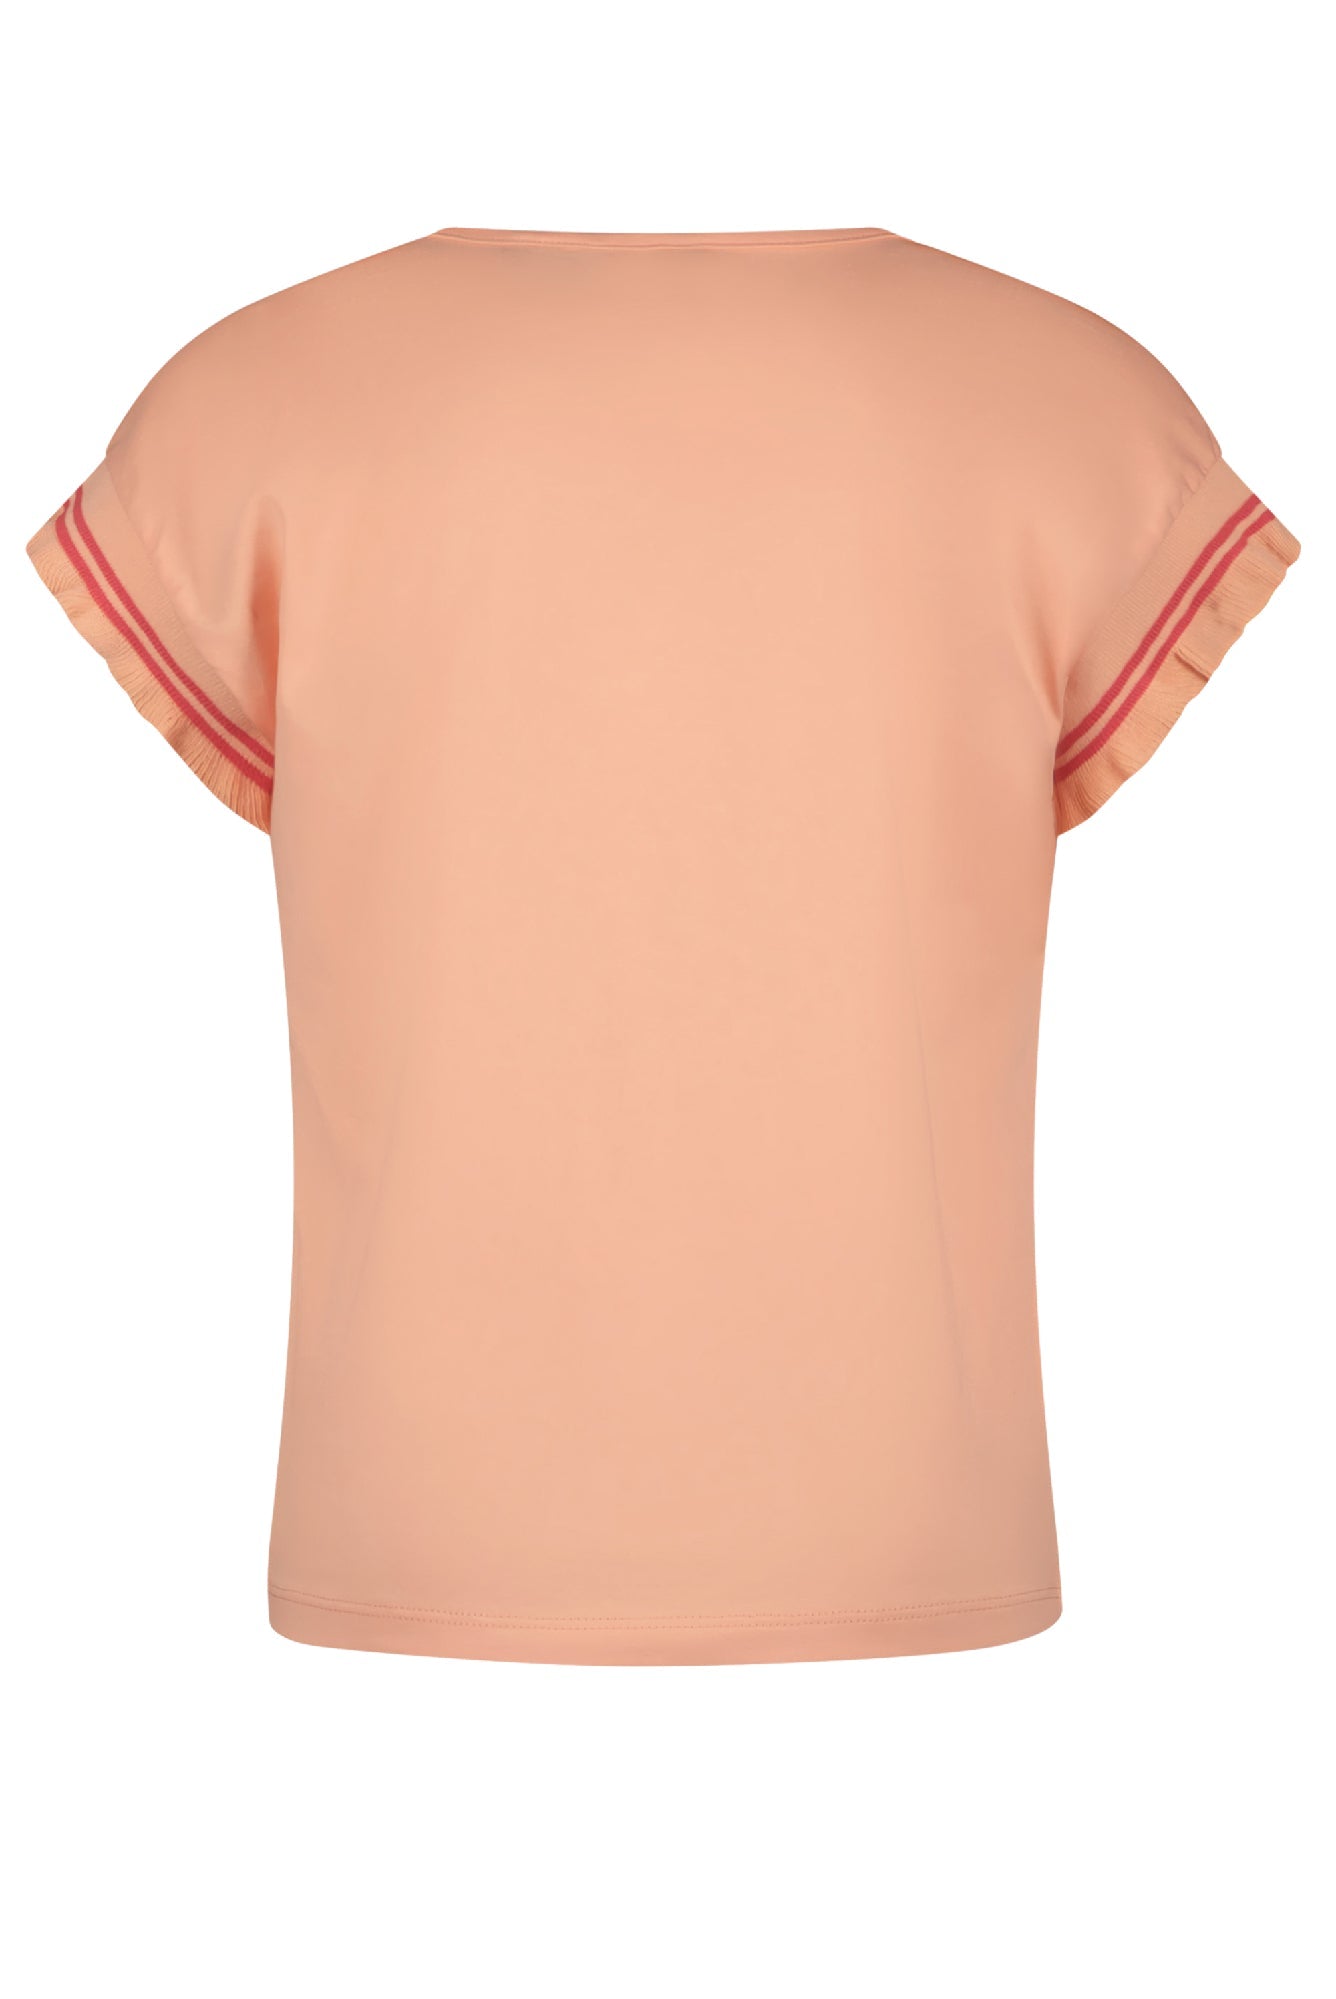 Meisjes Kanai music notes tshirt s/sl with ruffled rib at sleeve end van NoNo in de kleur Light Peach in maat 134-140.